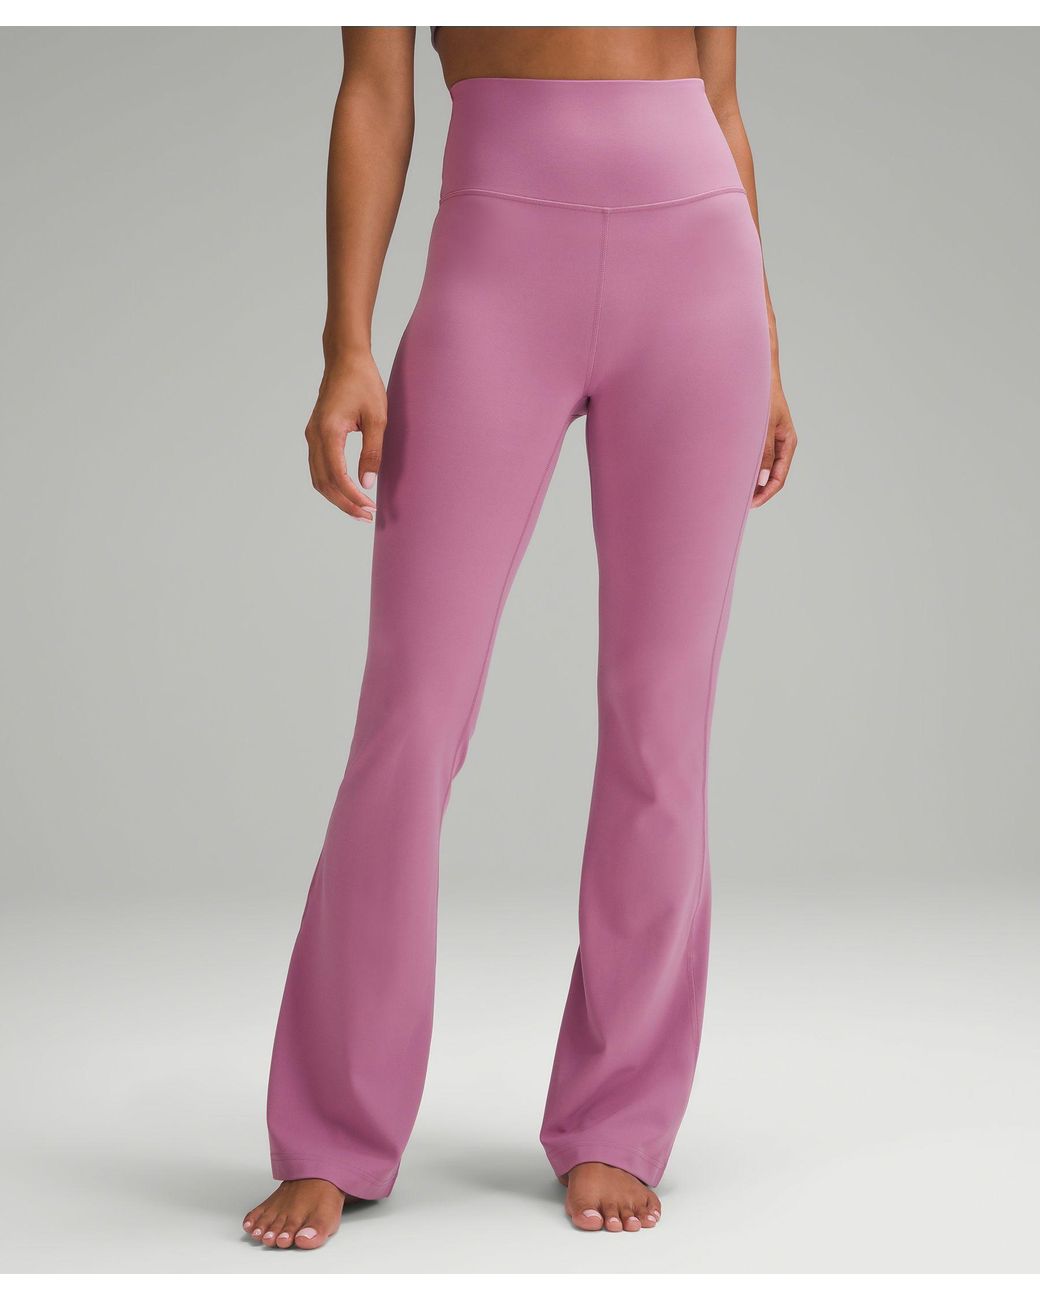 lululemon athletica Groove Super-high-rise Flared Pants Nulu Regular -  Color Pink/purple - Size 14